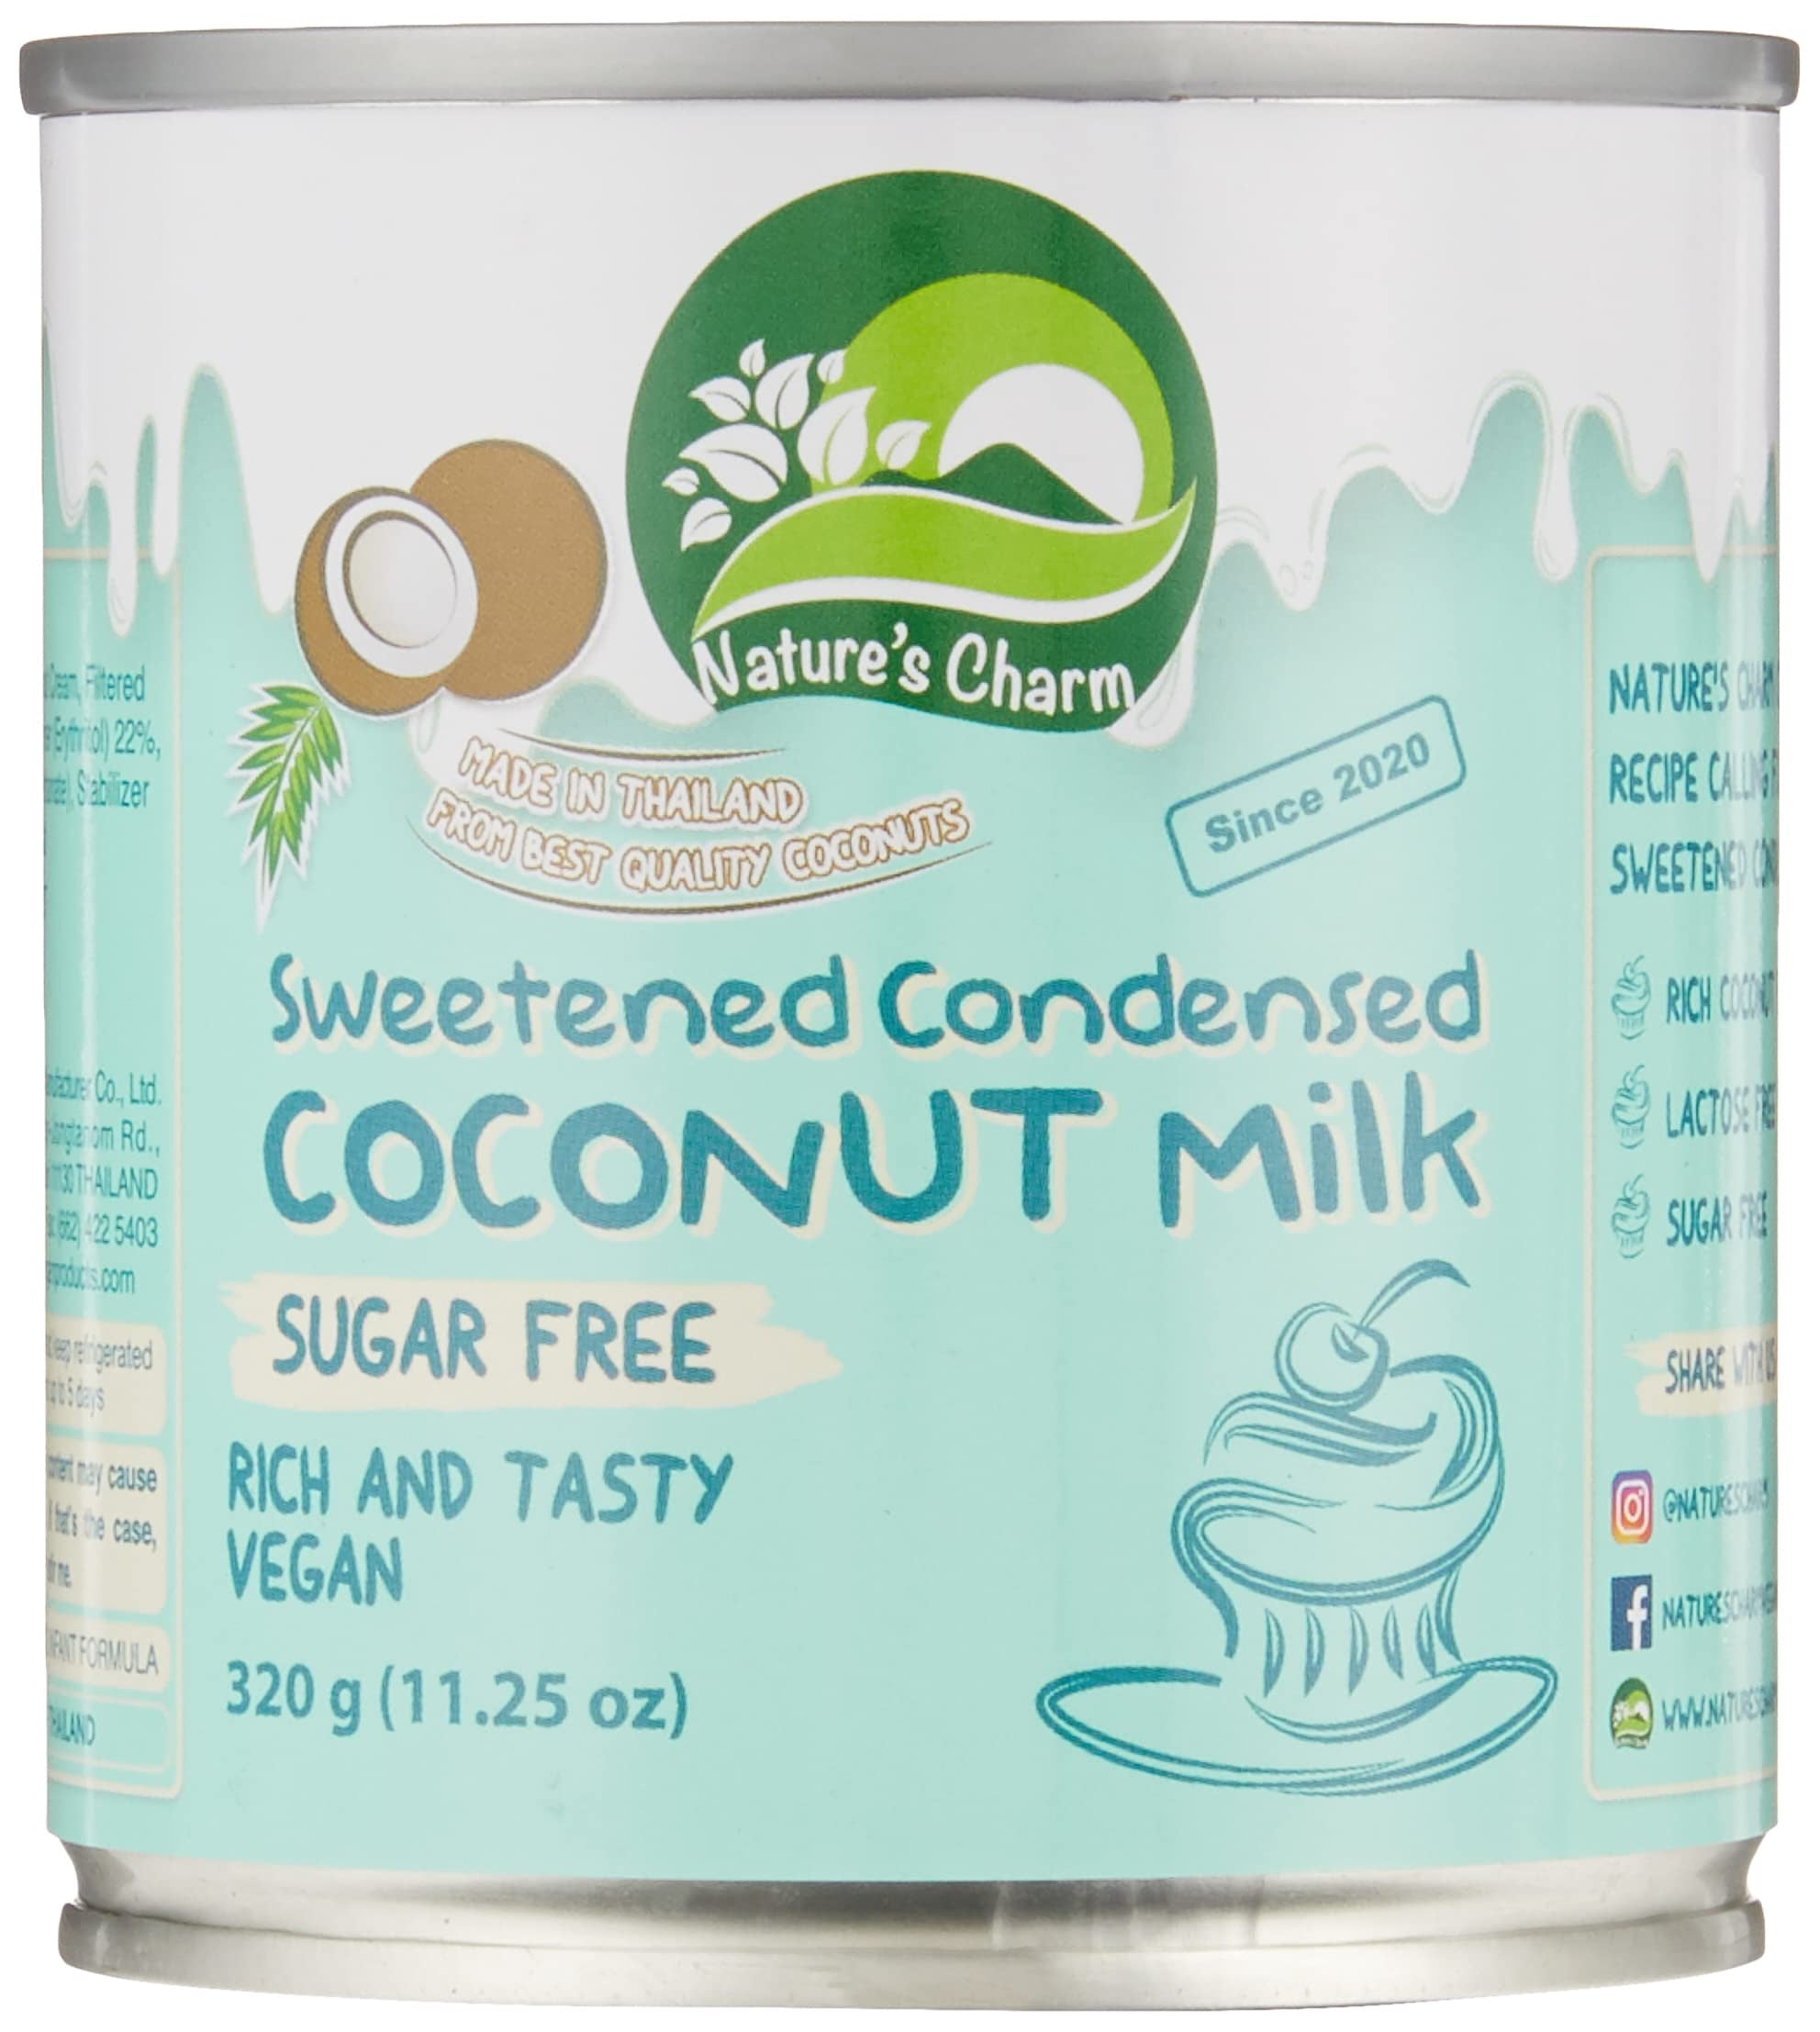 Natures Charm Sweetened Condensed Coconut Milk Sugar Free 320g